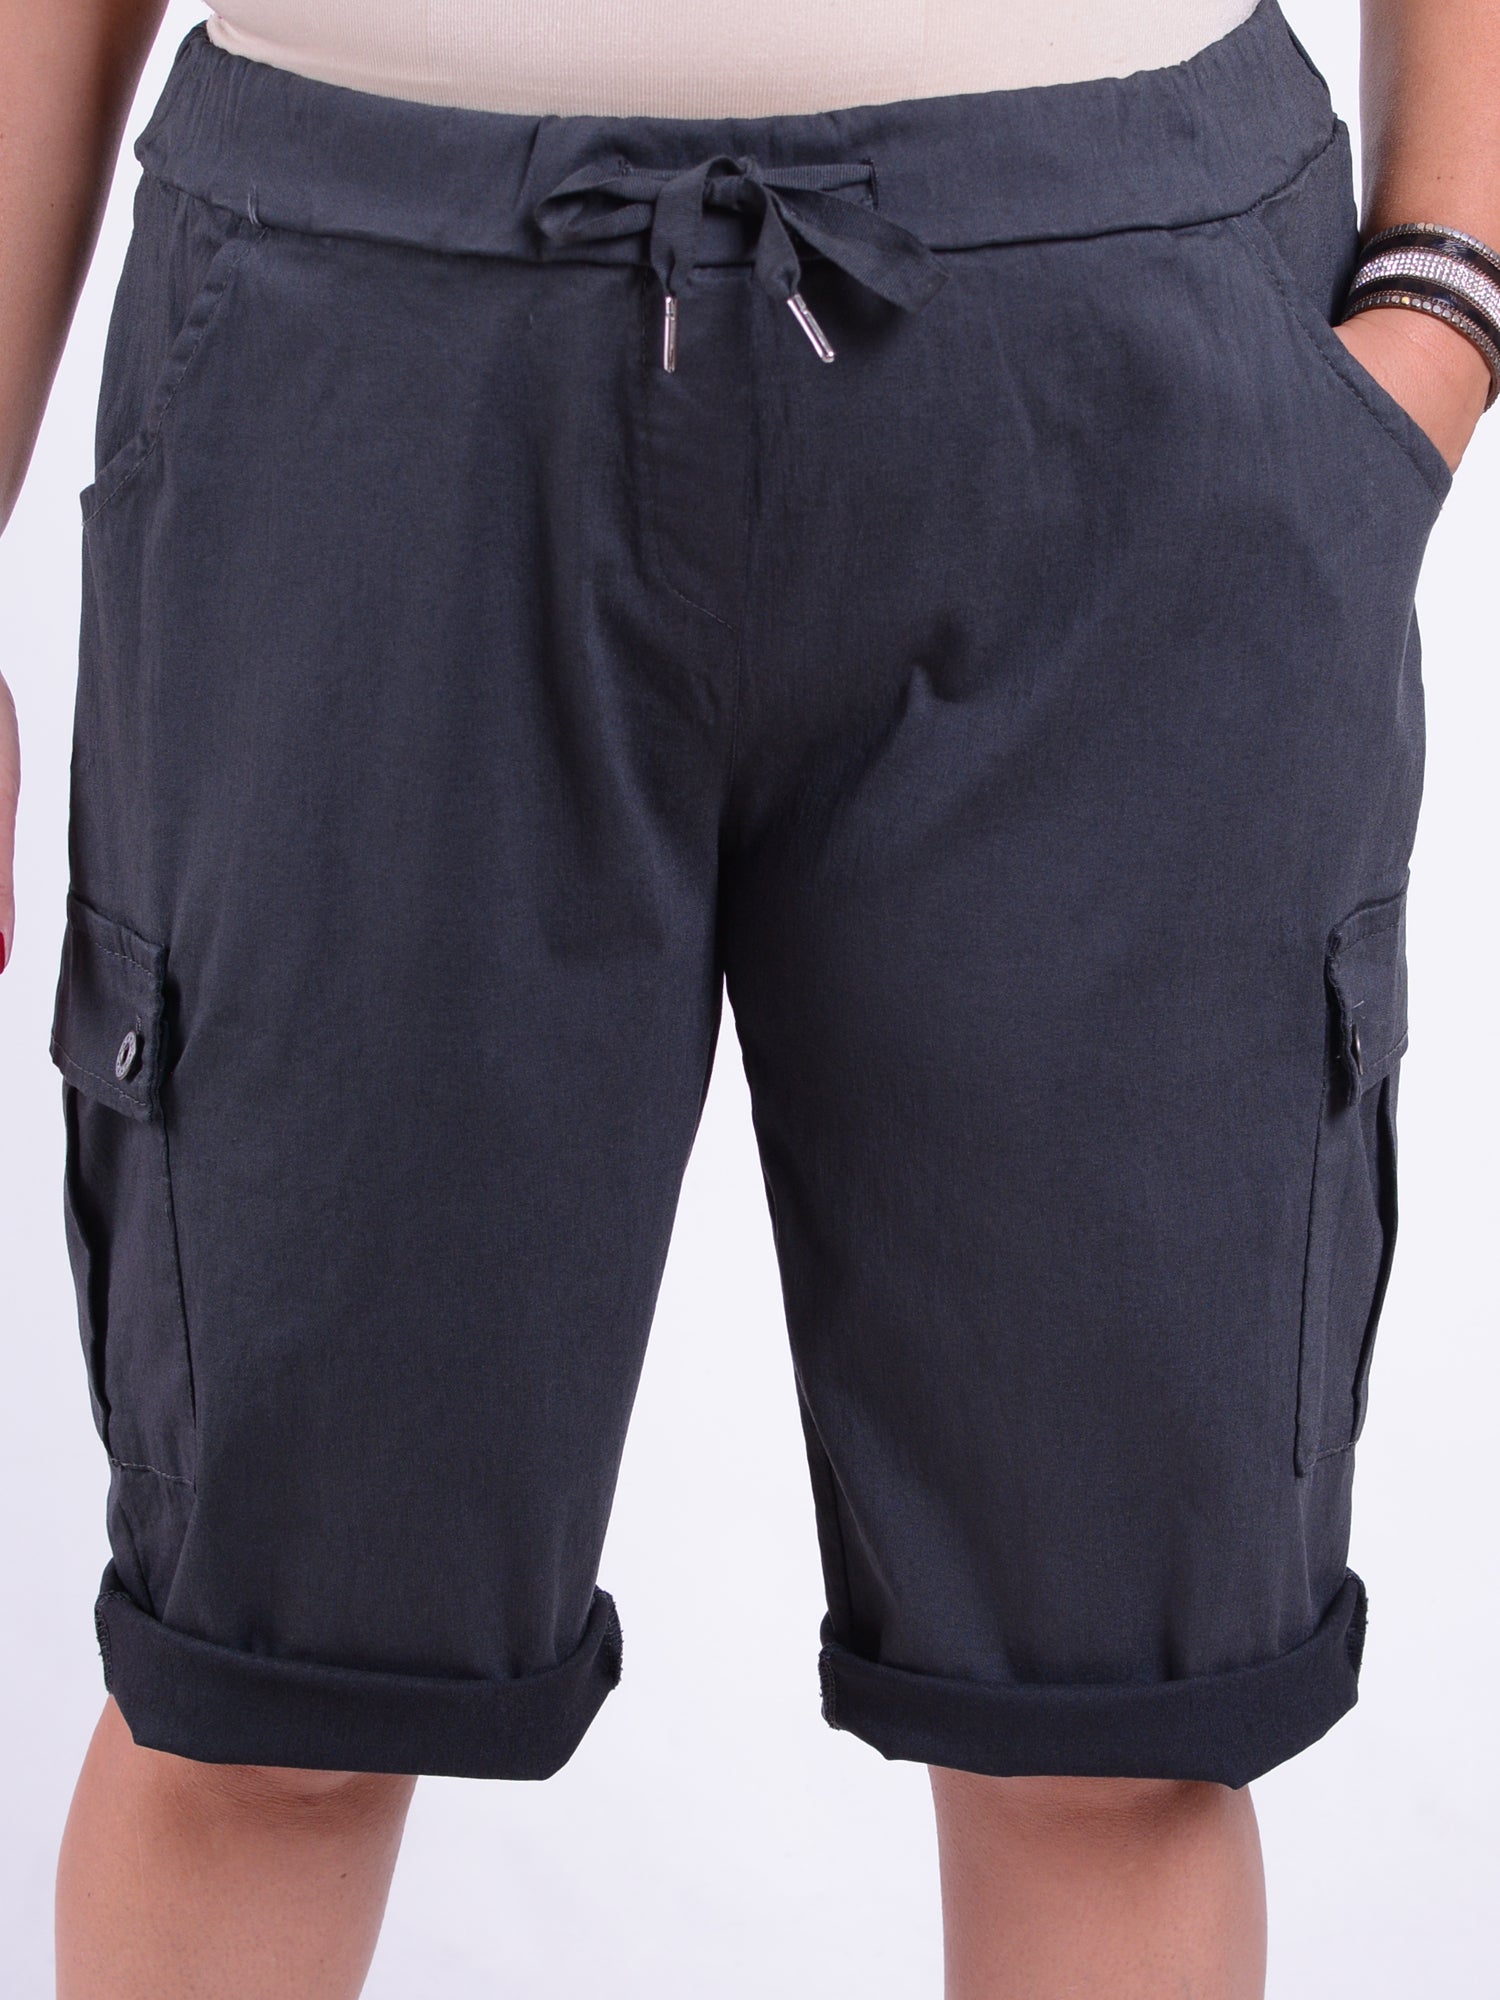 Magic Cargo Shorts - 10642A, Shorts, Pure Plus Clothing, Lagenlook Clothing, Plus Size Fashion, Over 50 Fashion